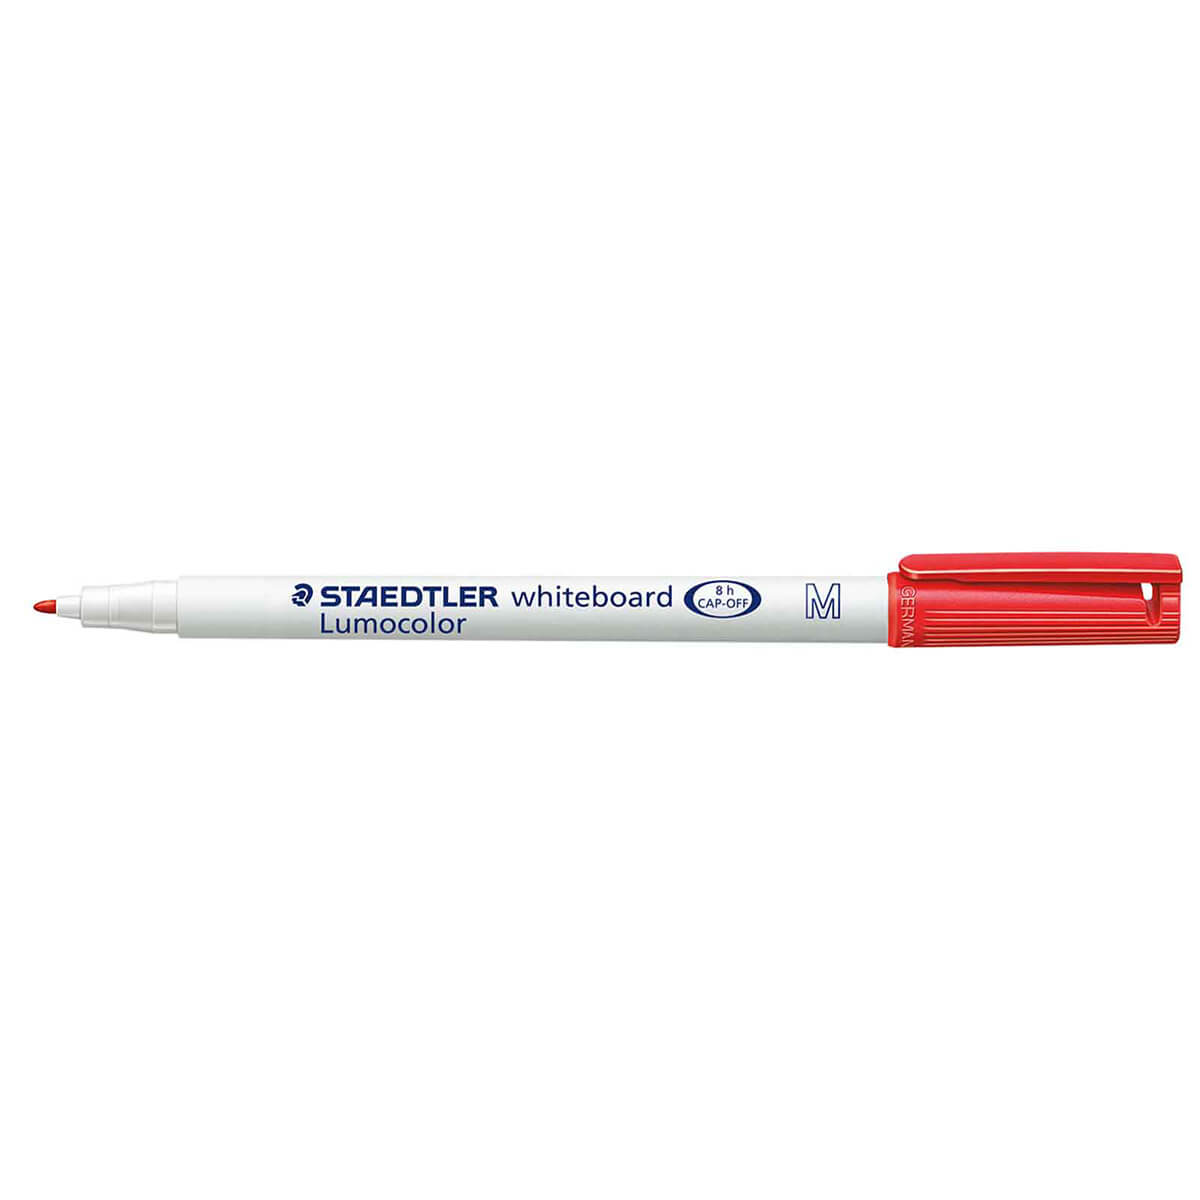 Staedtler Whiteboard pen Lumocolor 301 Red